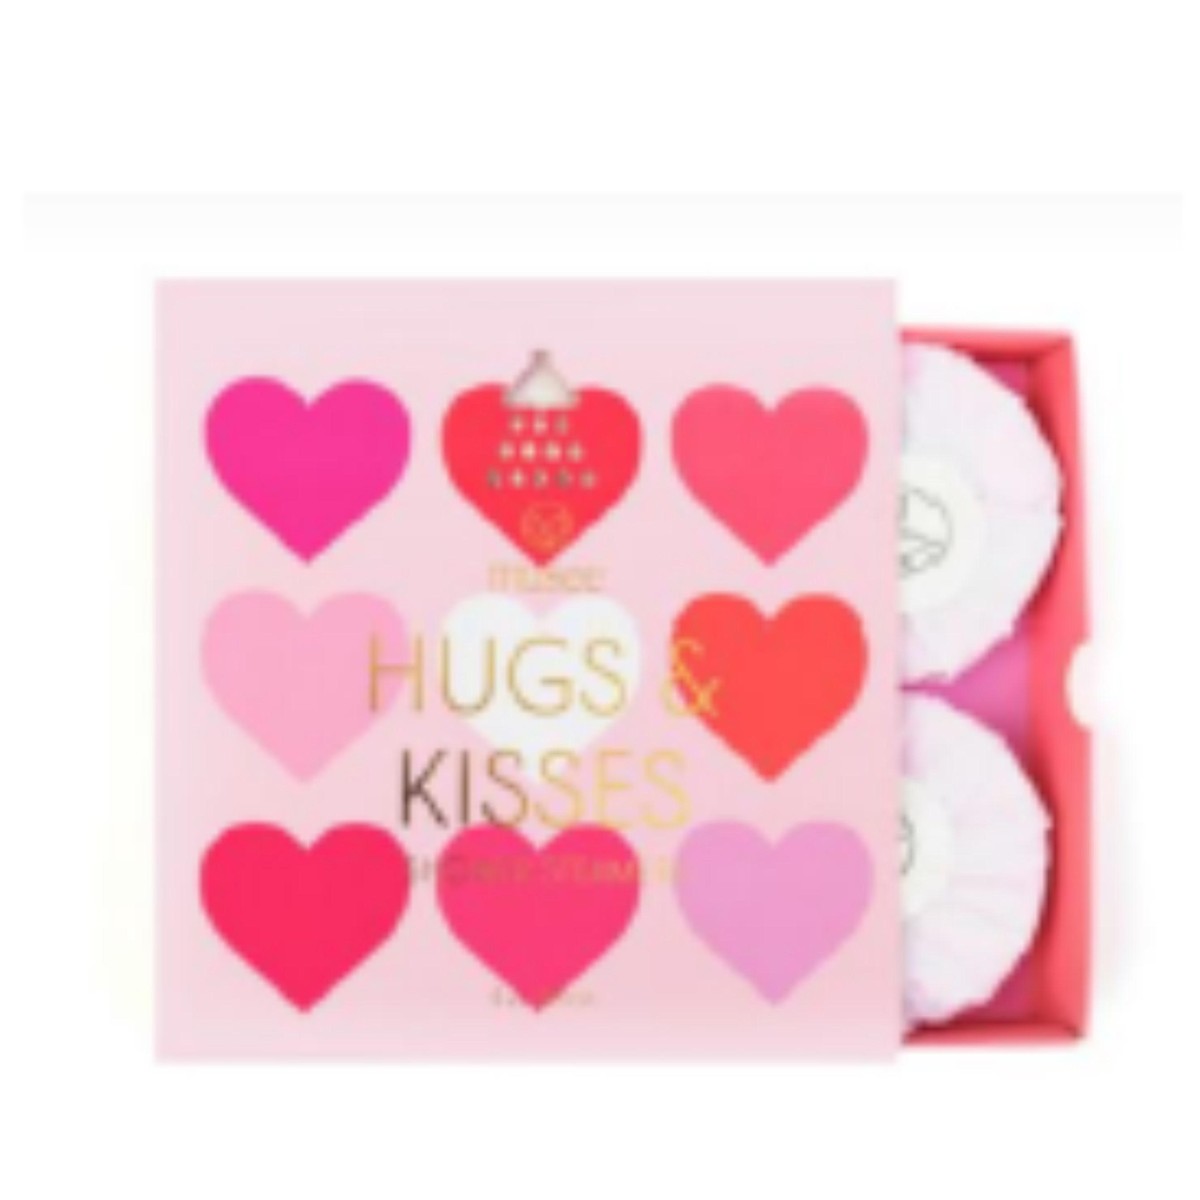  MUSEE Palets parfumés Hugs+ Kisses  